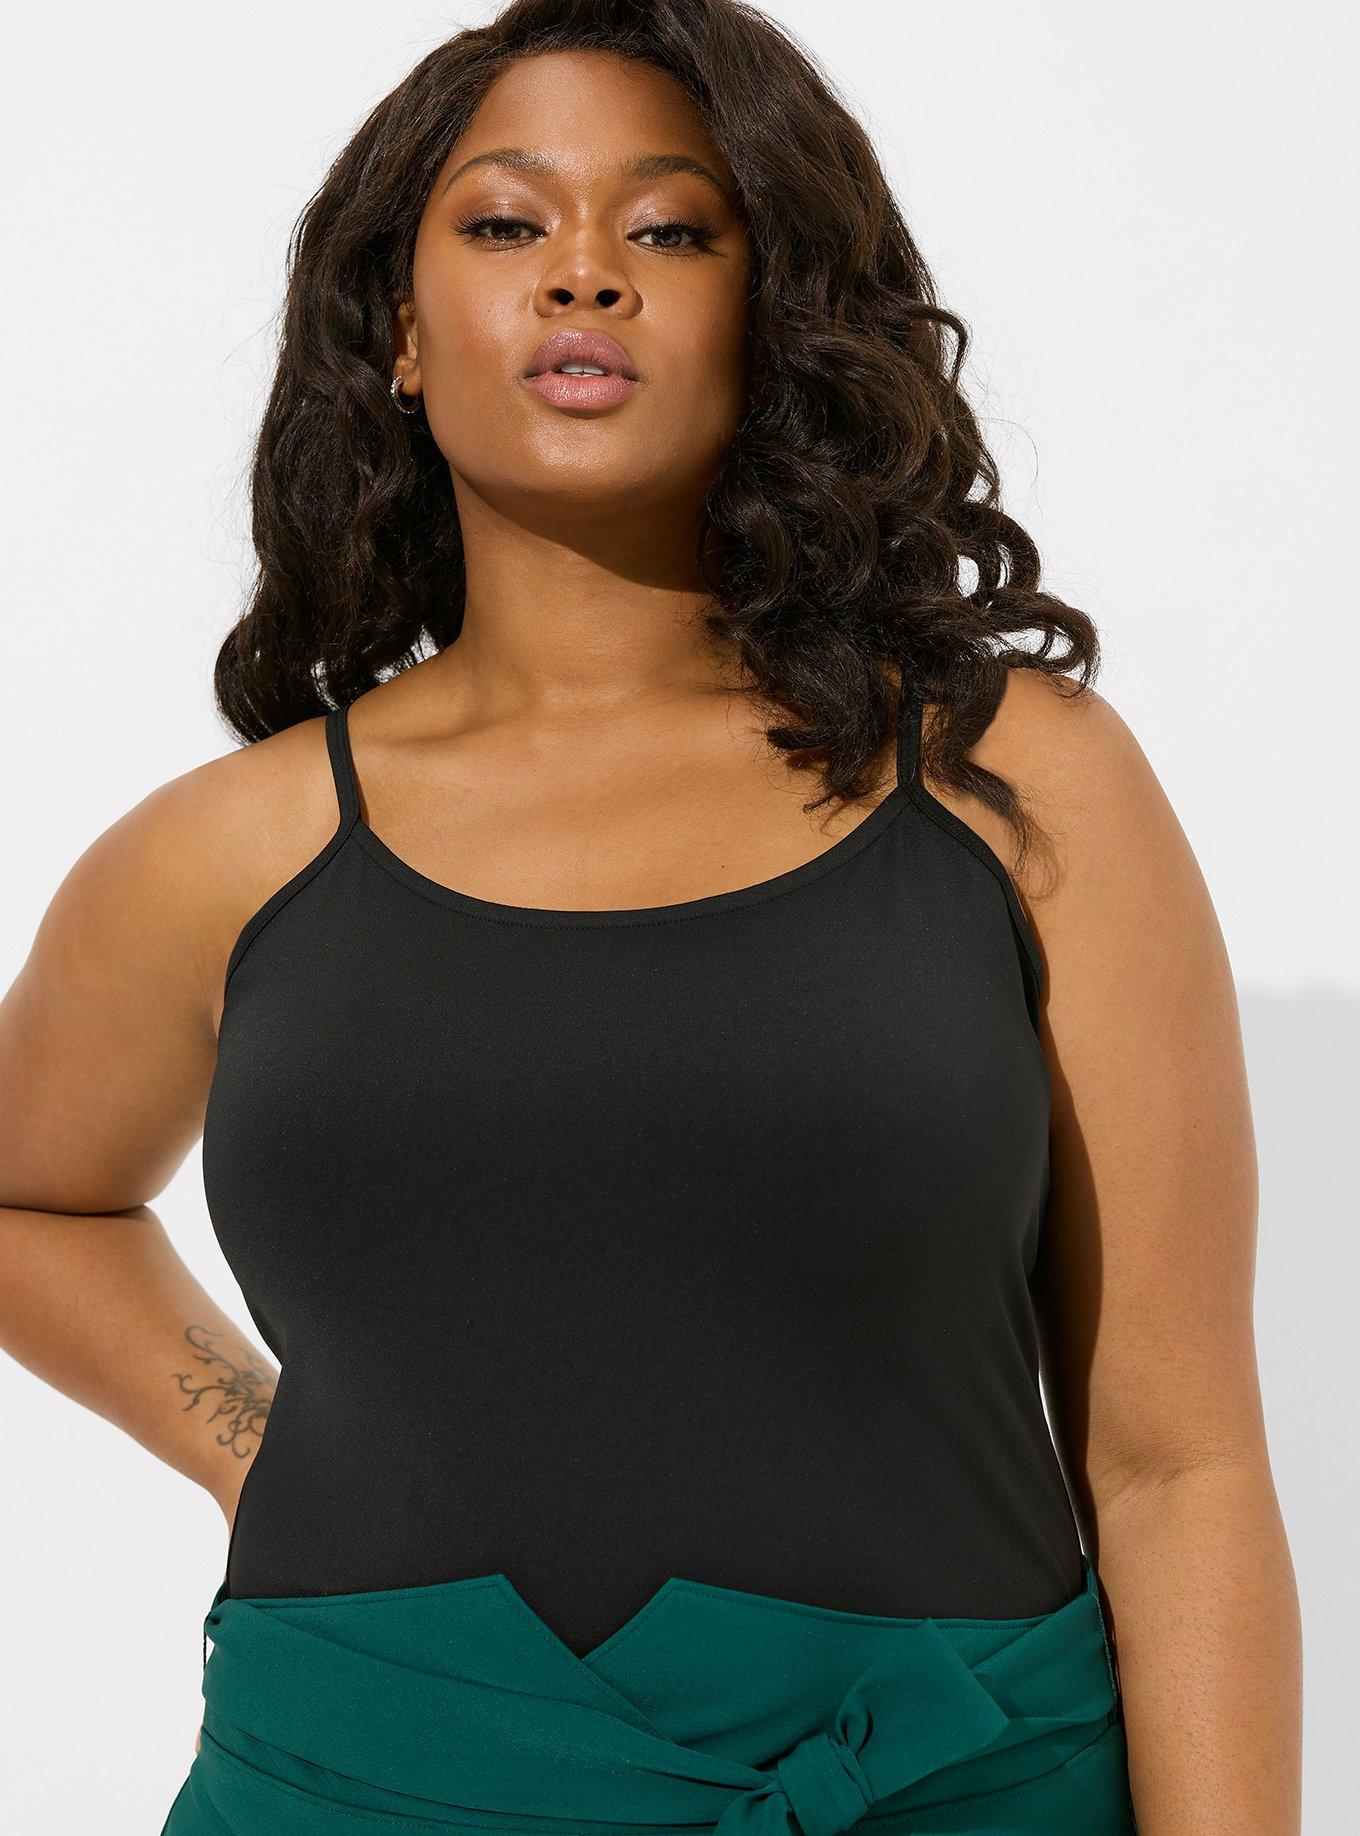 Women's Glamourmom Tricot tank top, size 38 (Black)